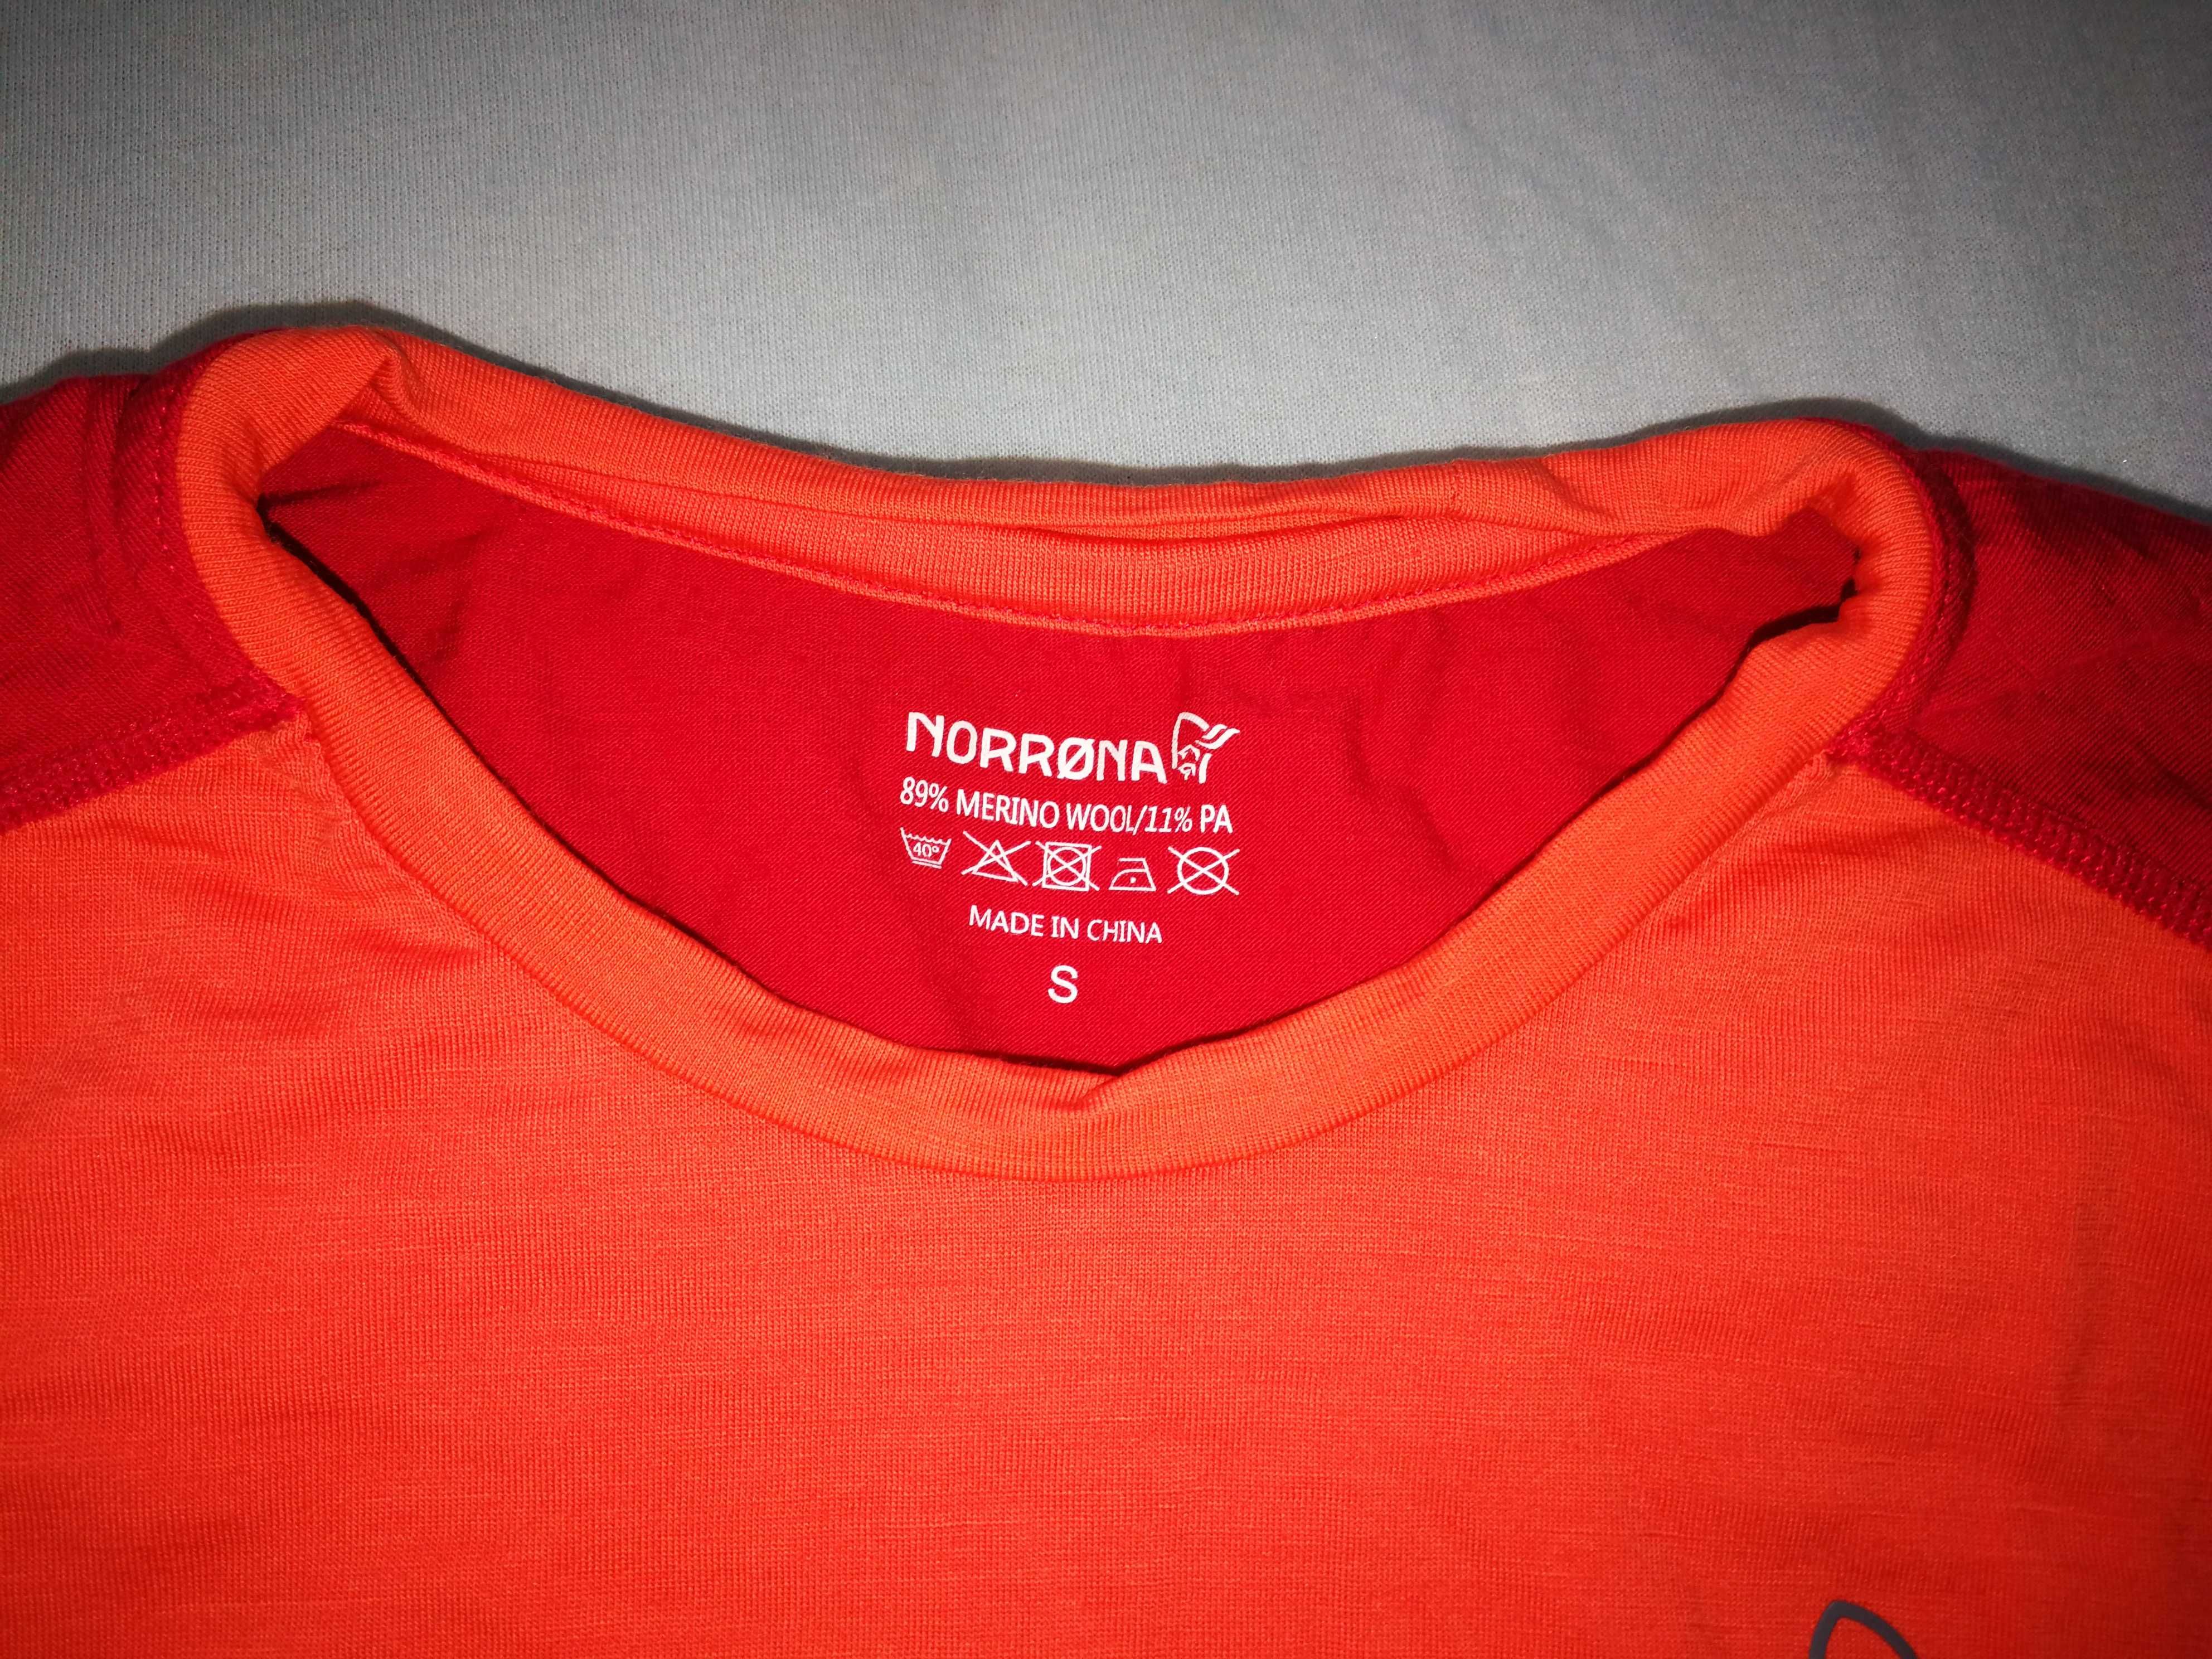 Norrona koszulka termiczna  damska Merino Wool rozmiar S